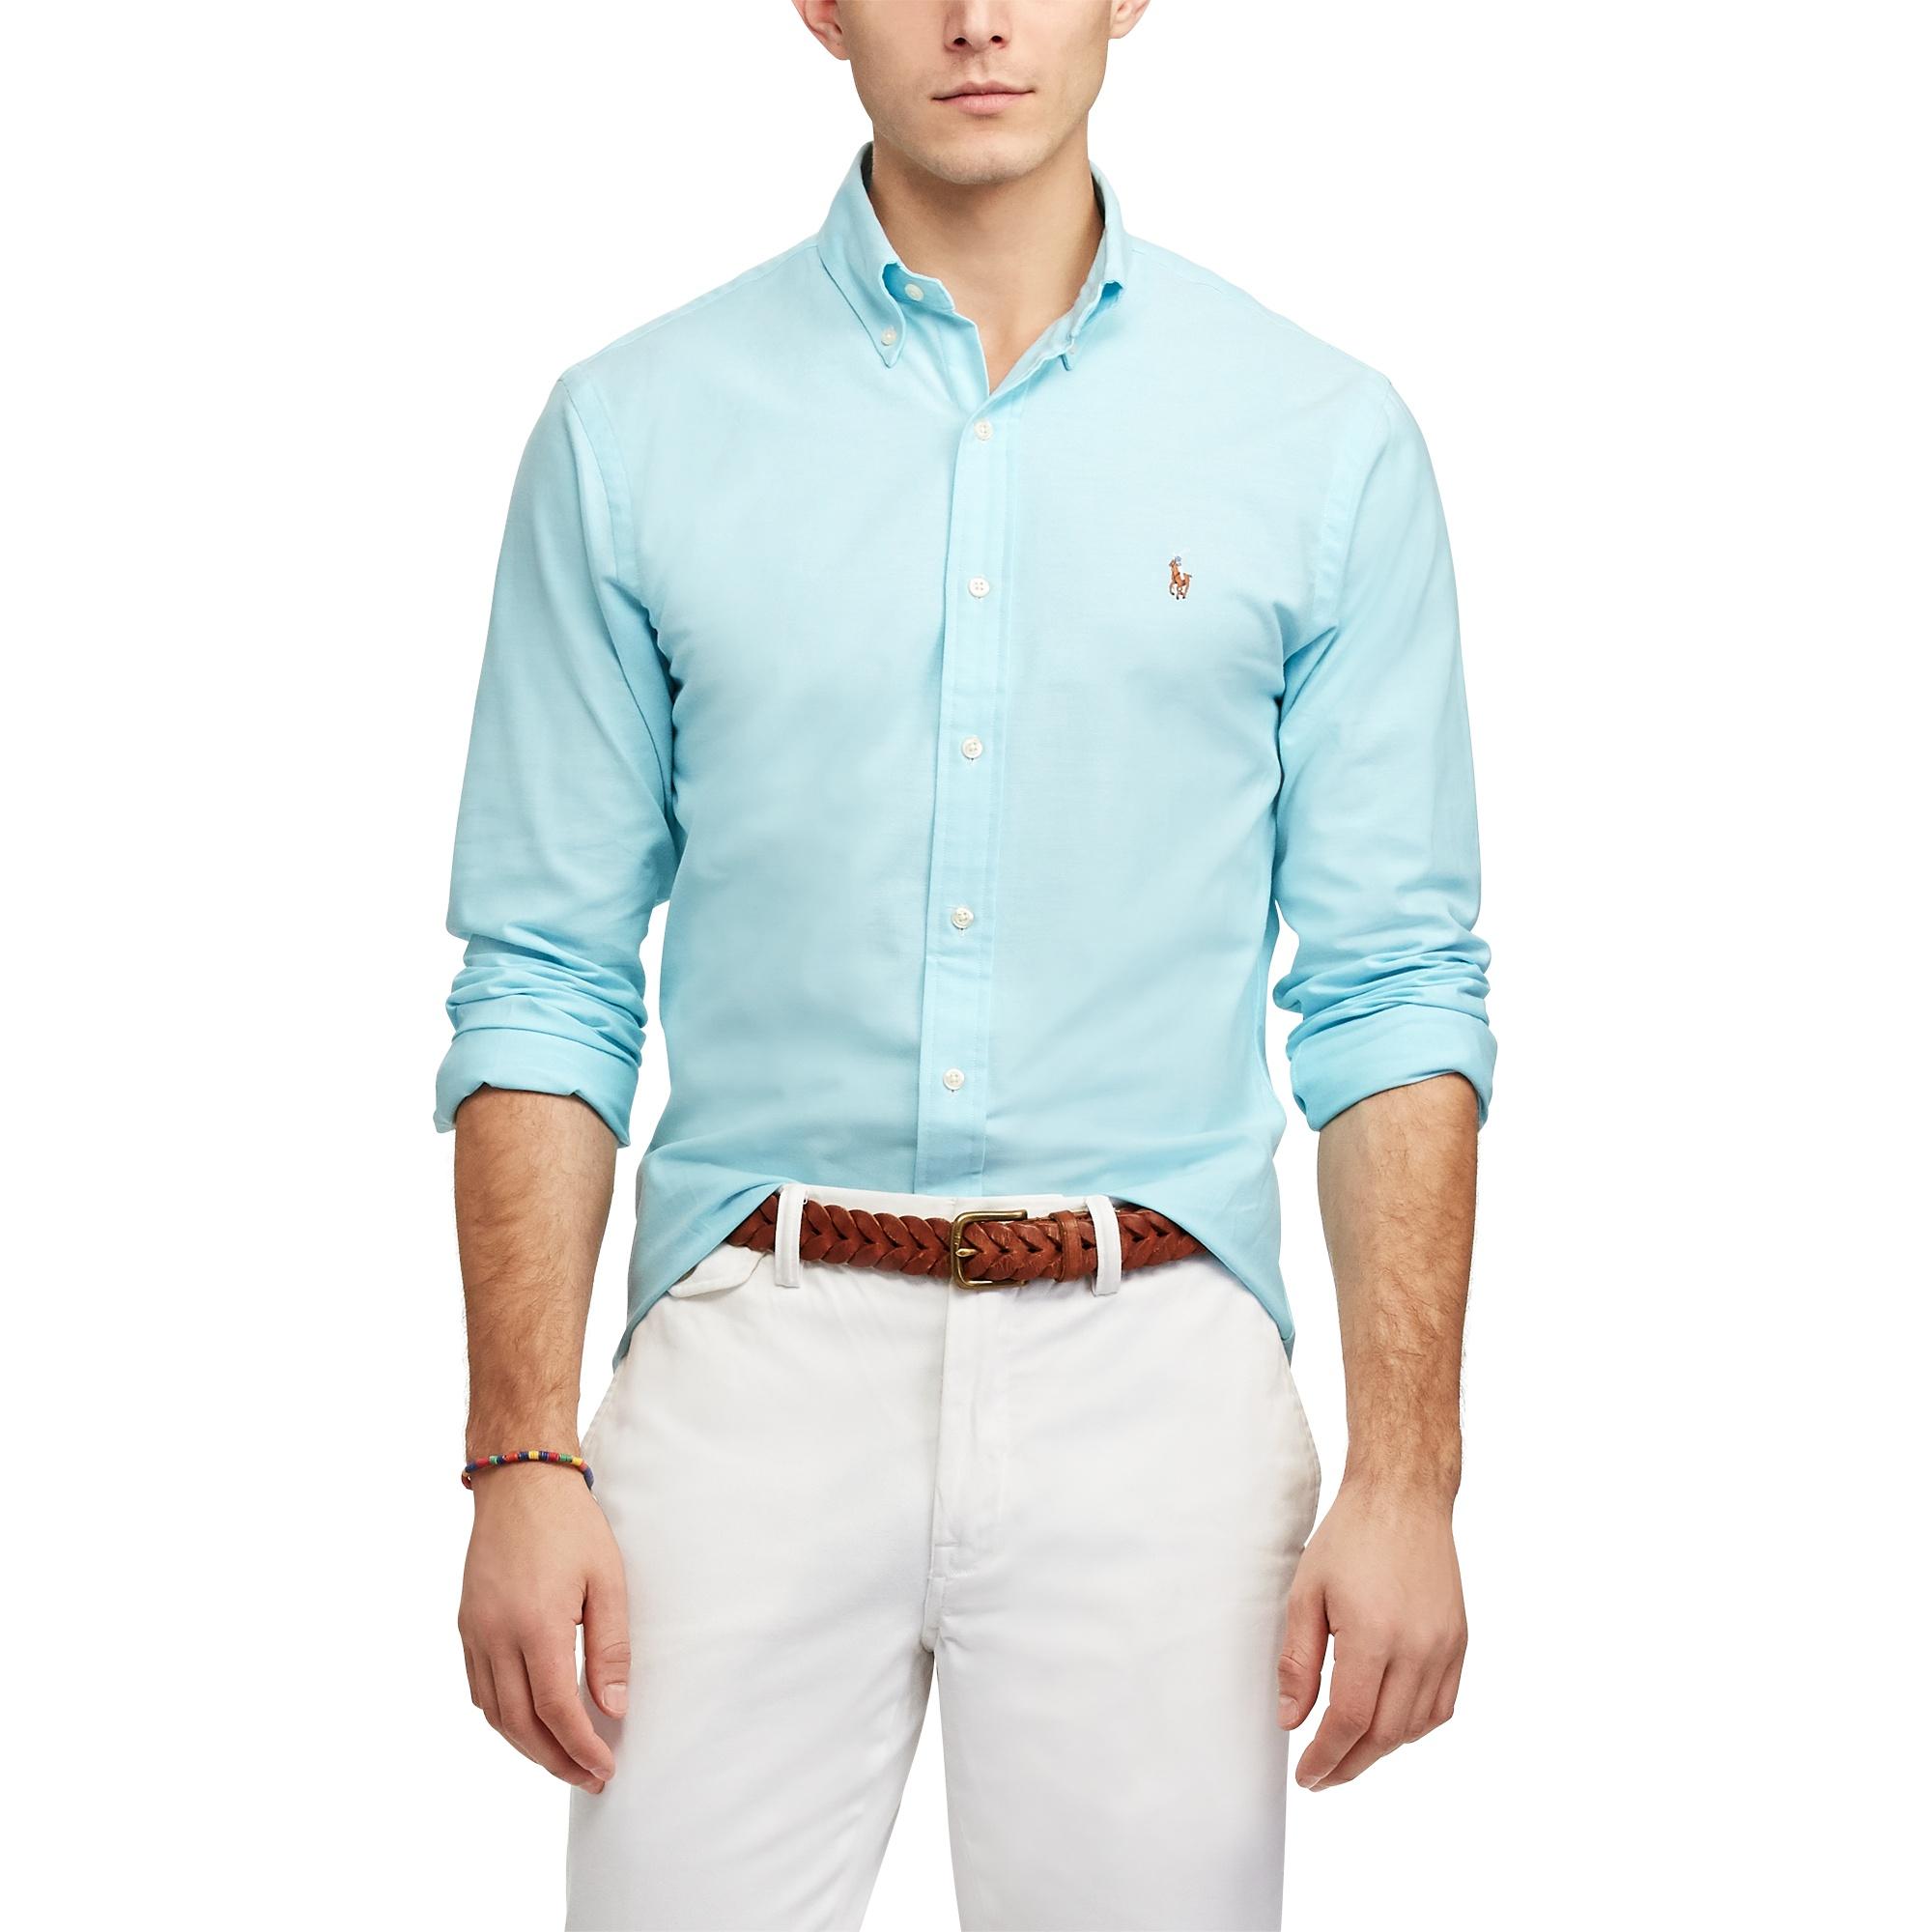 Ralph Lauren Cotton Slim Fit Stretch Oxford Shirt in Blue for Men - Lyst